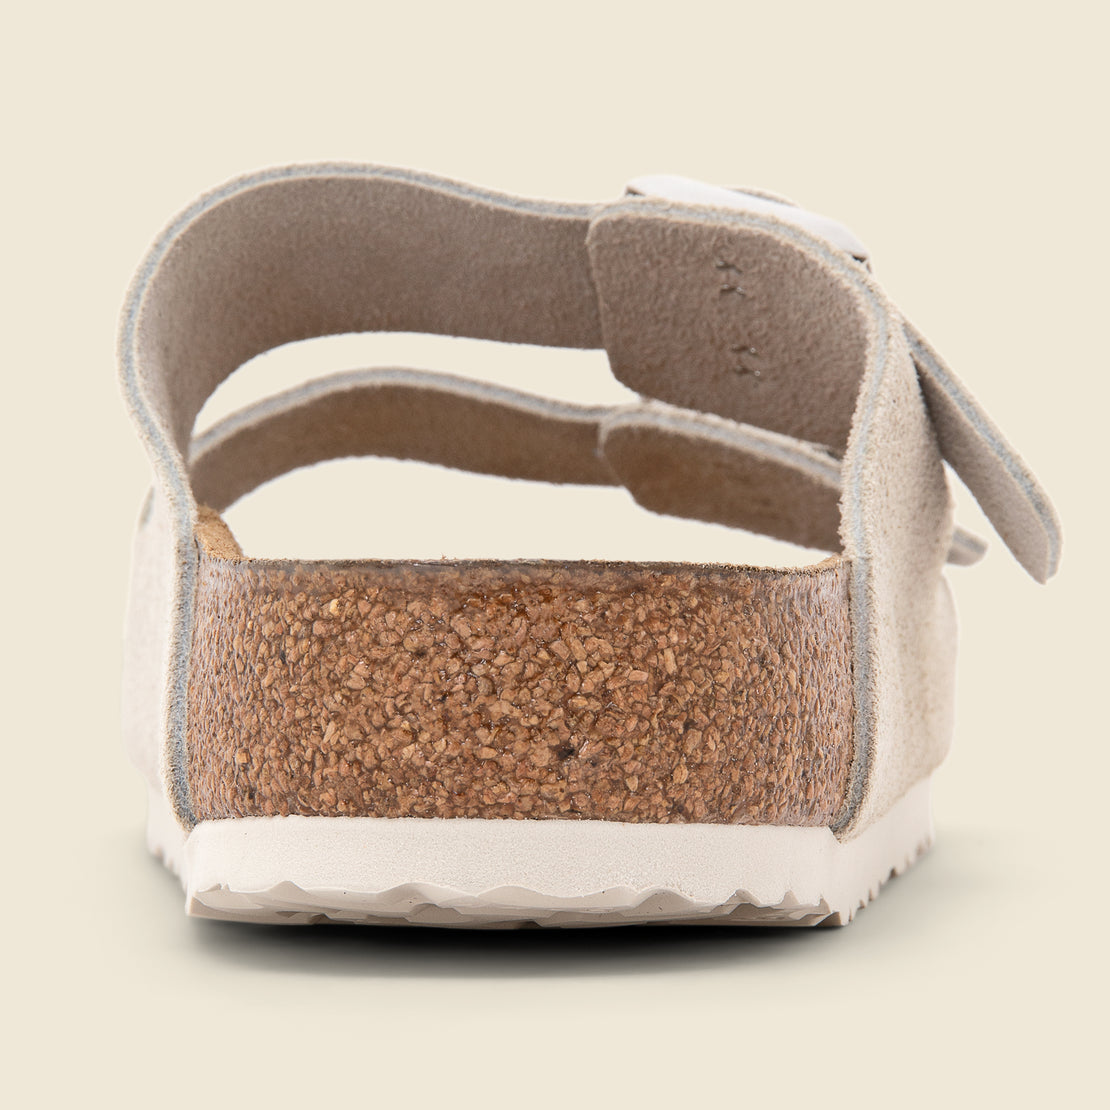 Arizona Suede Sandal - Antique White/Suede - Birkenstock - STAG Provisions - Shoes - Sandals / Flops